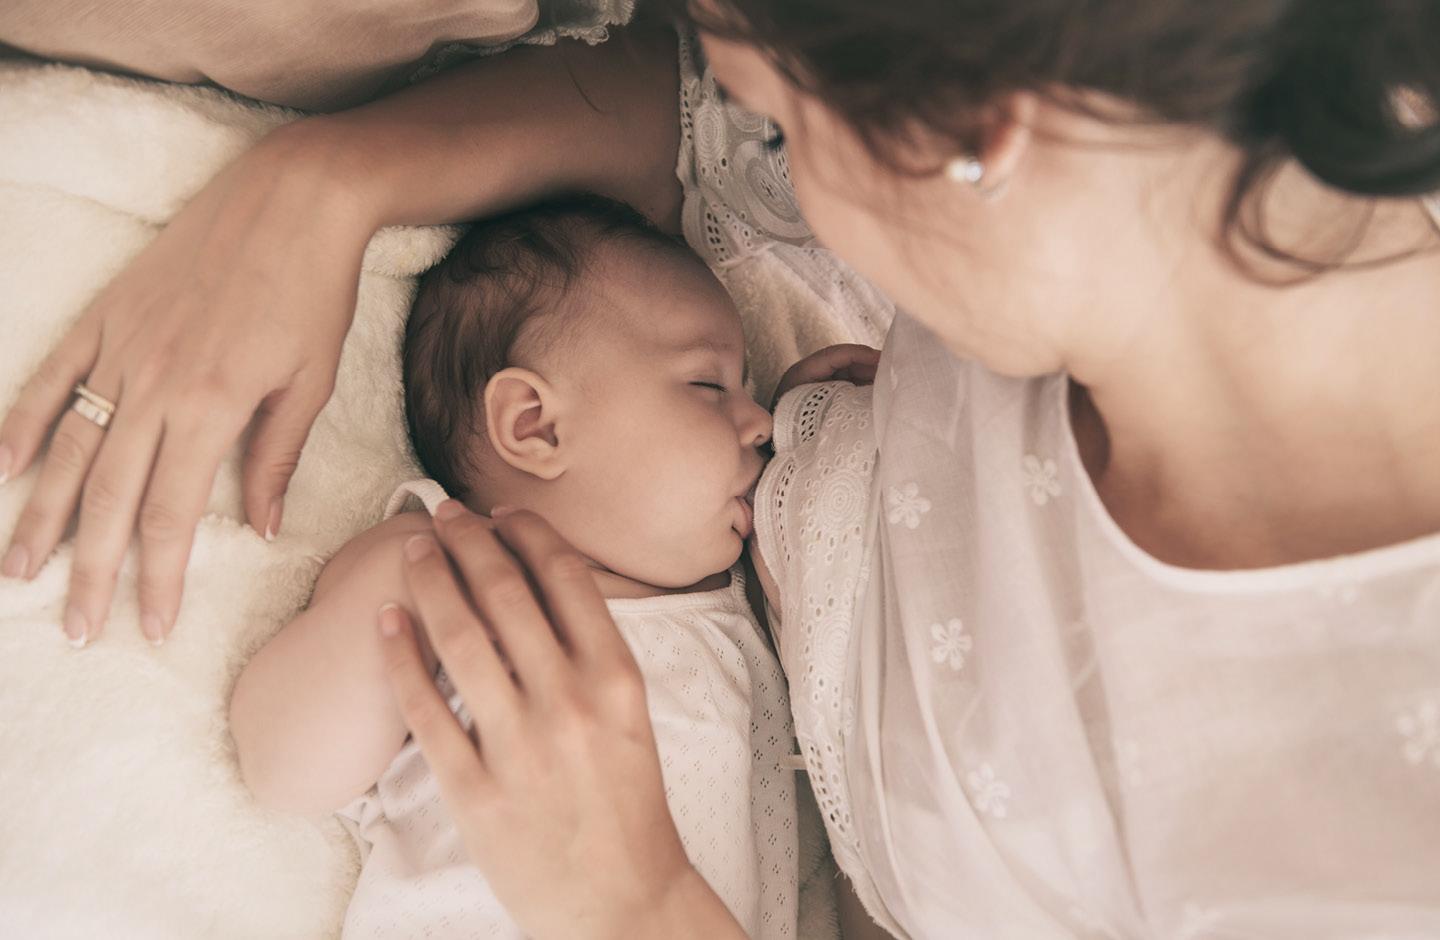 Junge Mutter stillt Baby 1 Monat alt im Bett